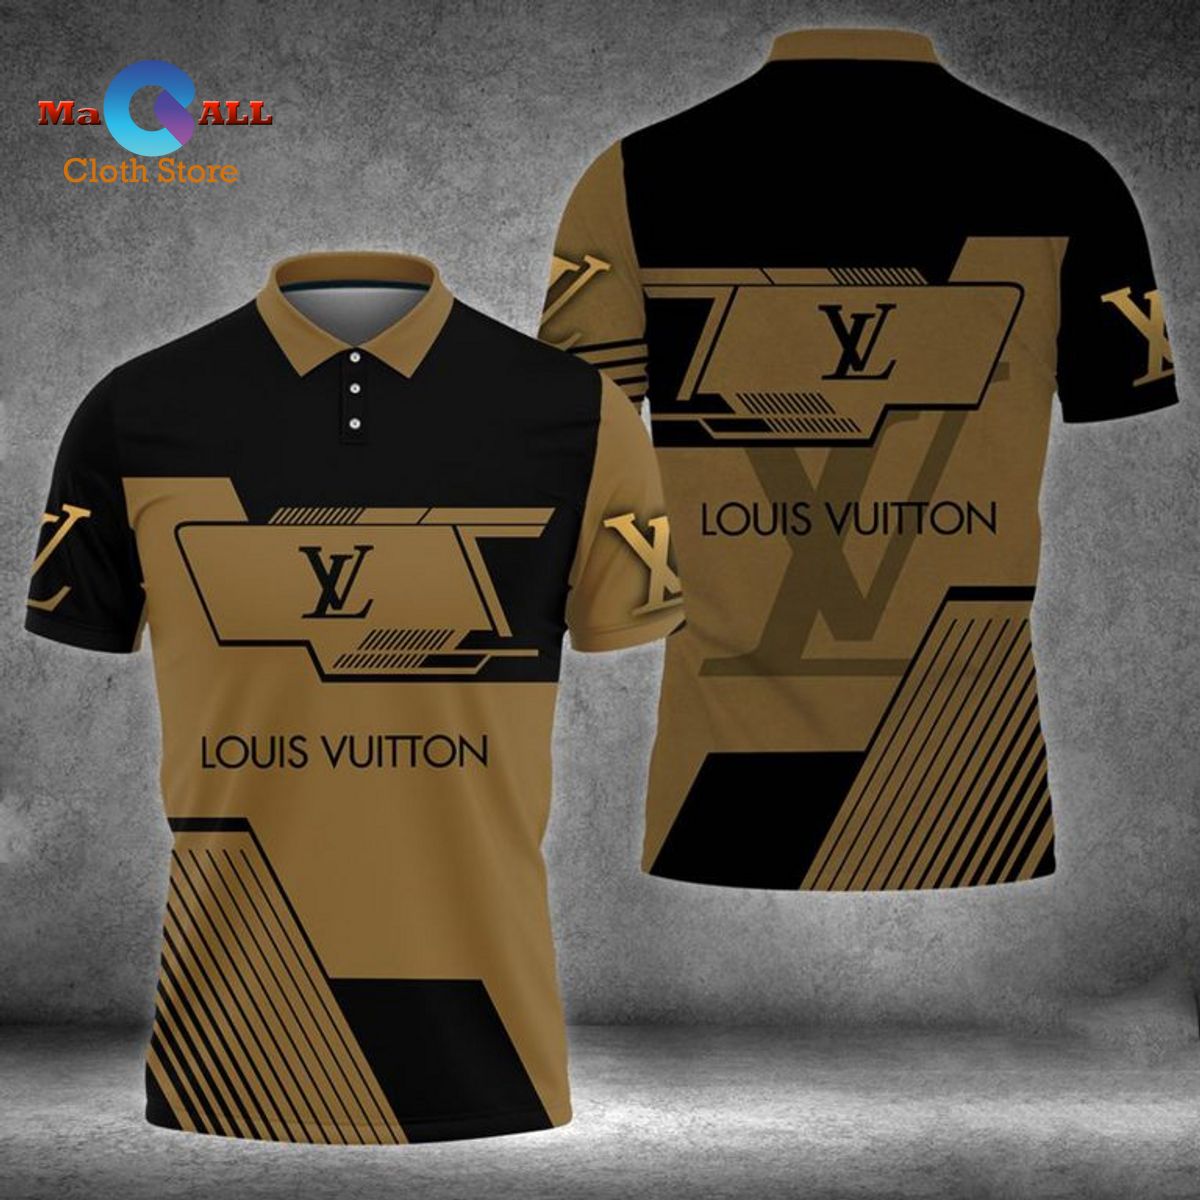 LOUIS VUITTON Premium polo shirts by Basic Wear